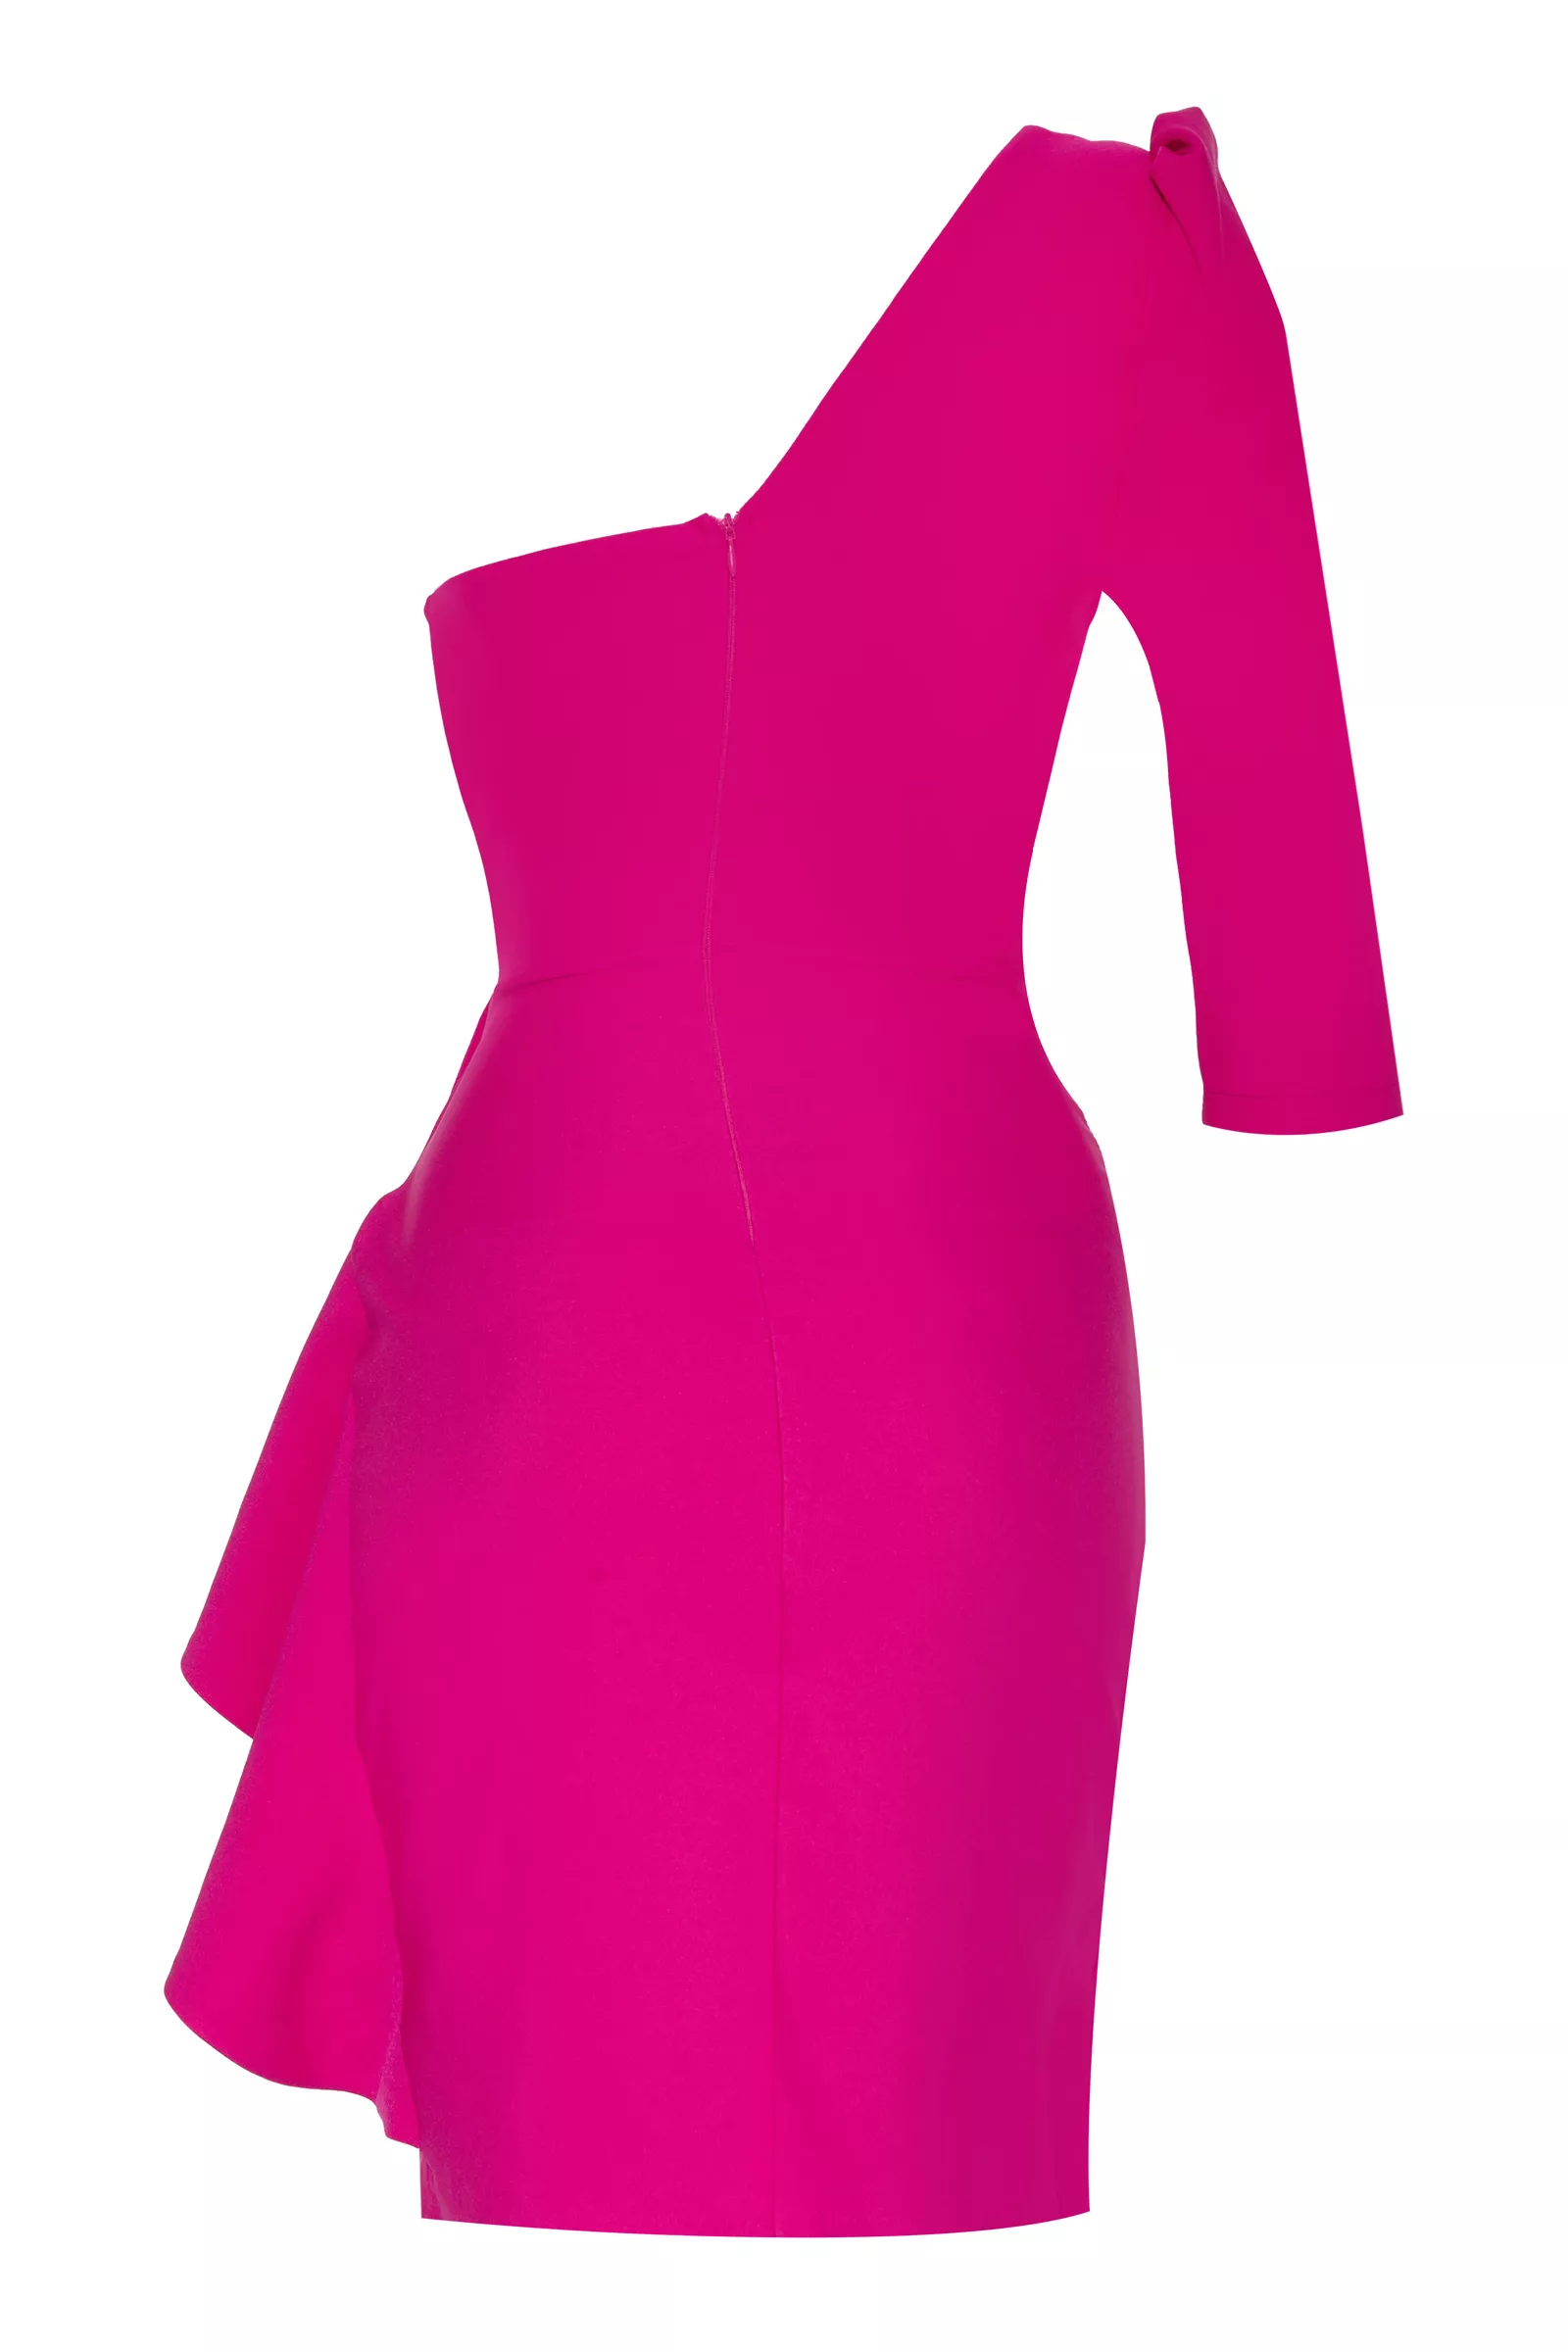 Halley Dress, Hot Pink Stretch Crepe